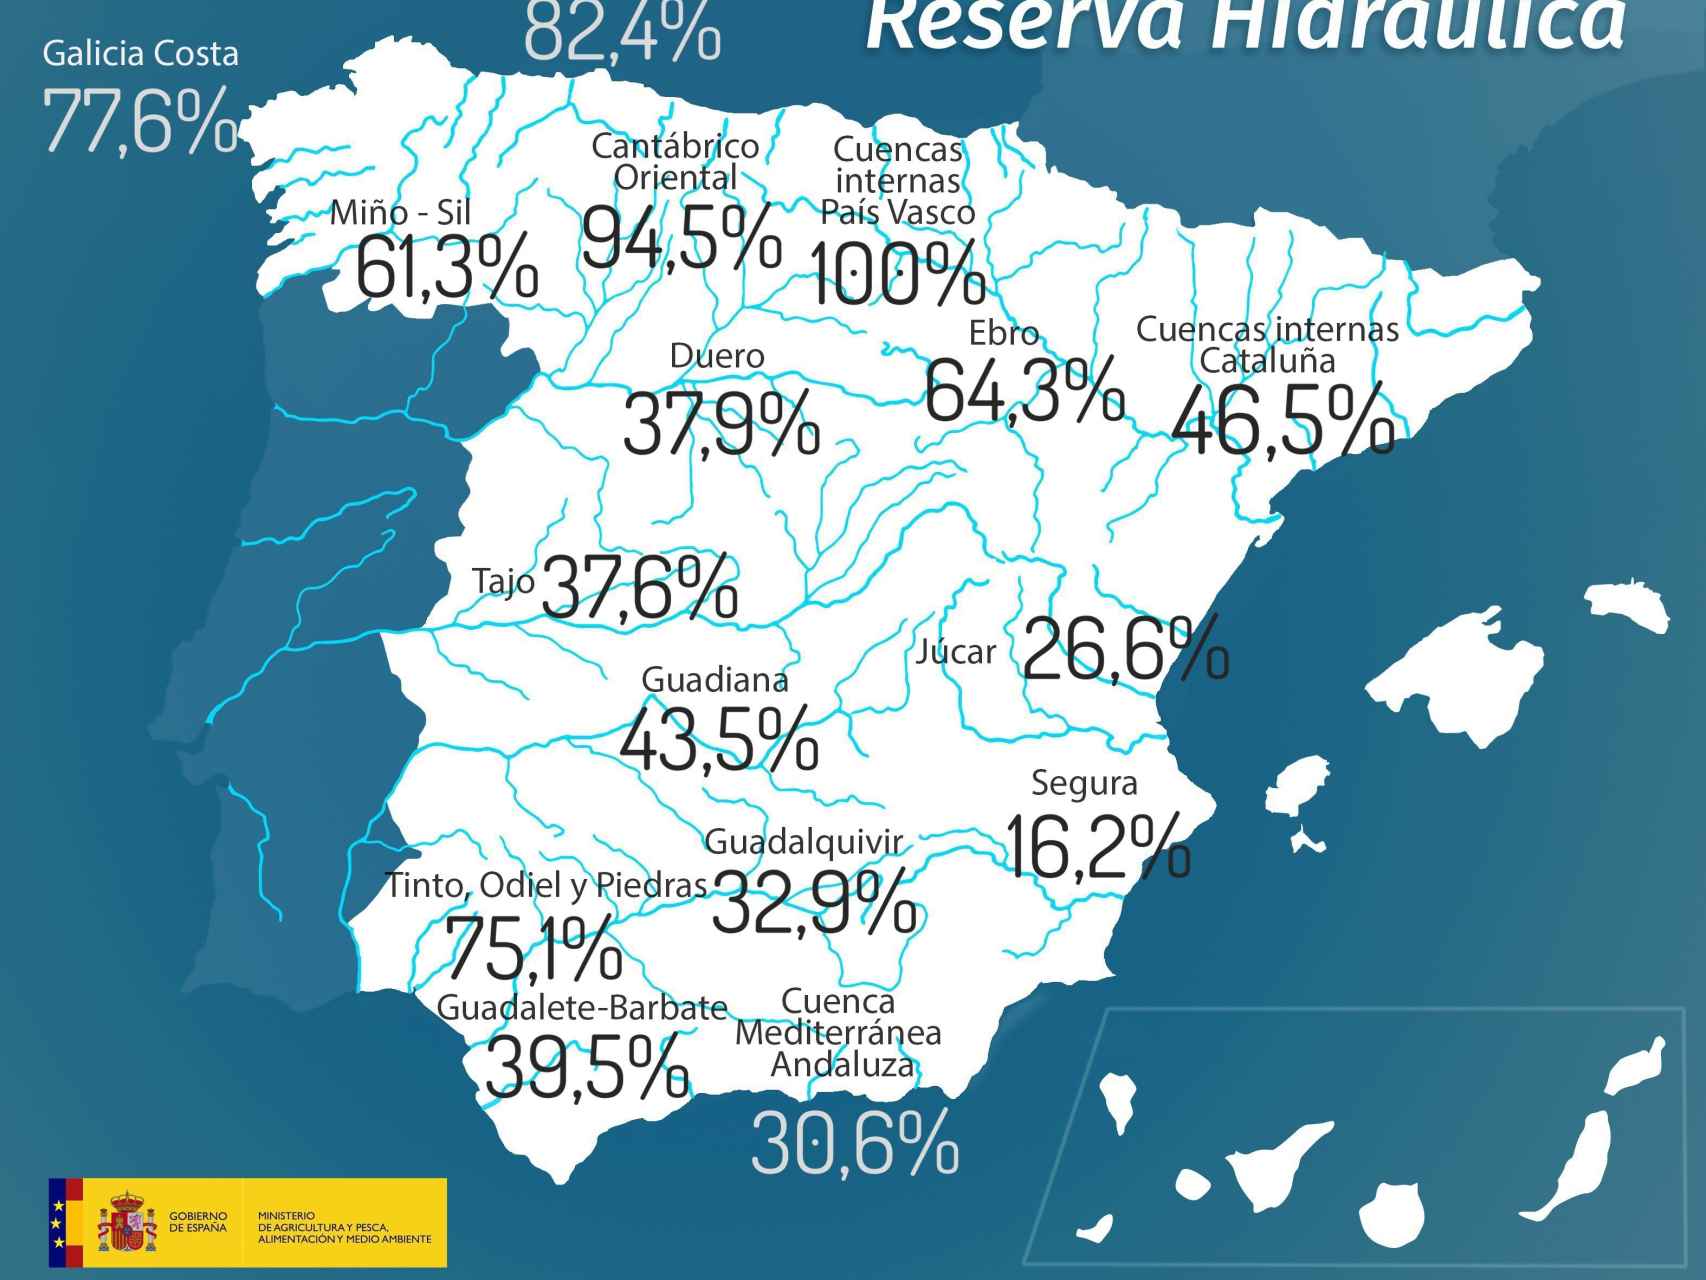 Niveles de la reserva hidráulica española el 20 de febrero de 2018.